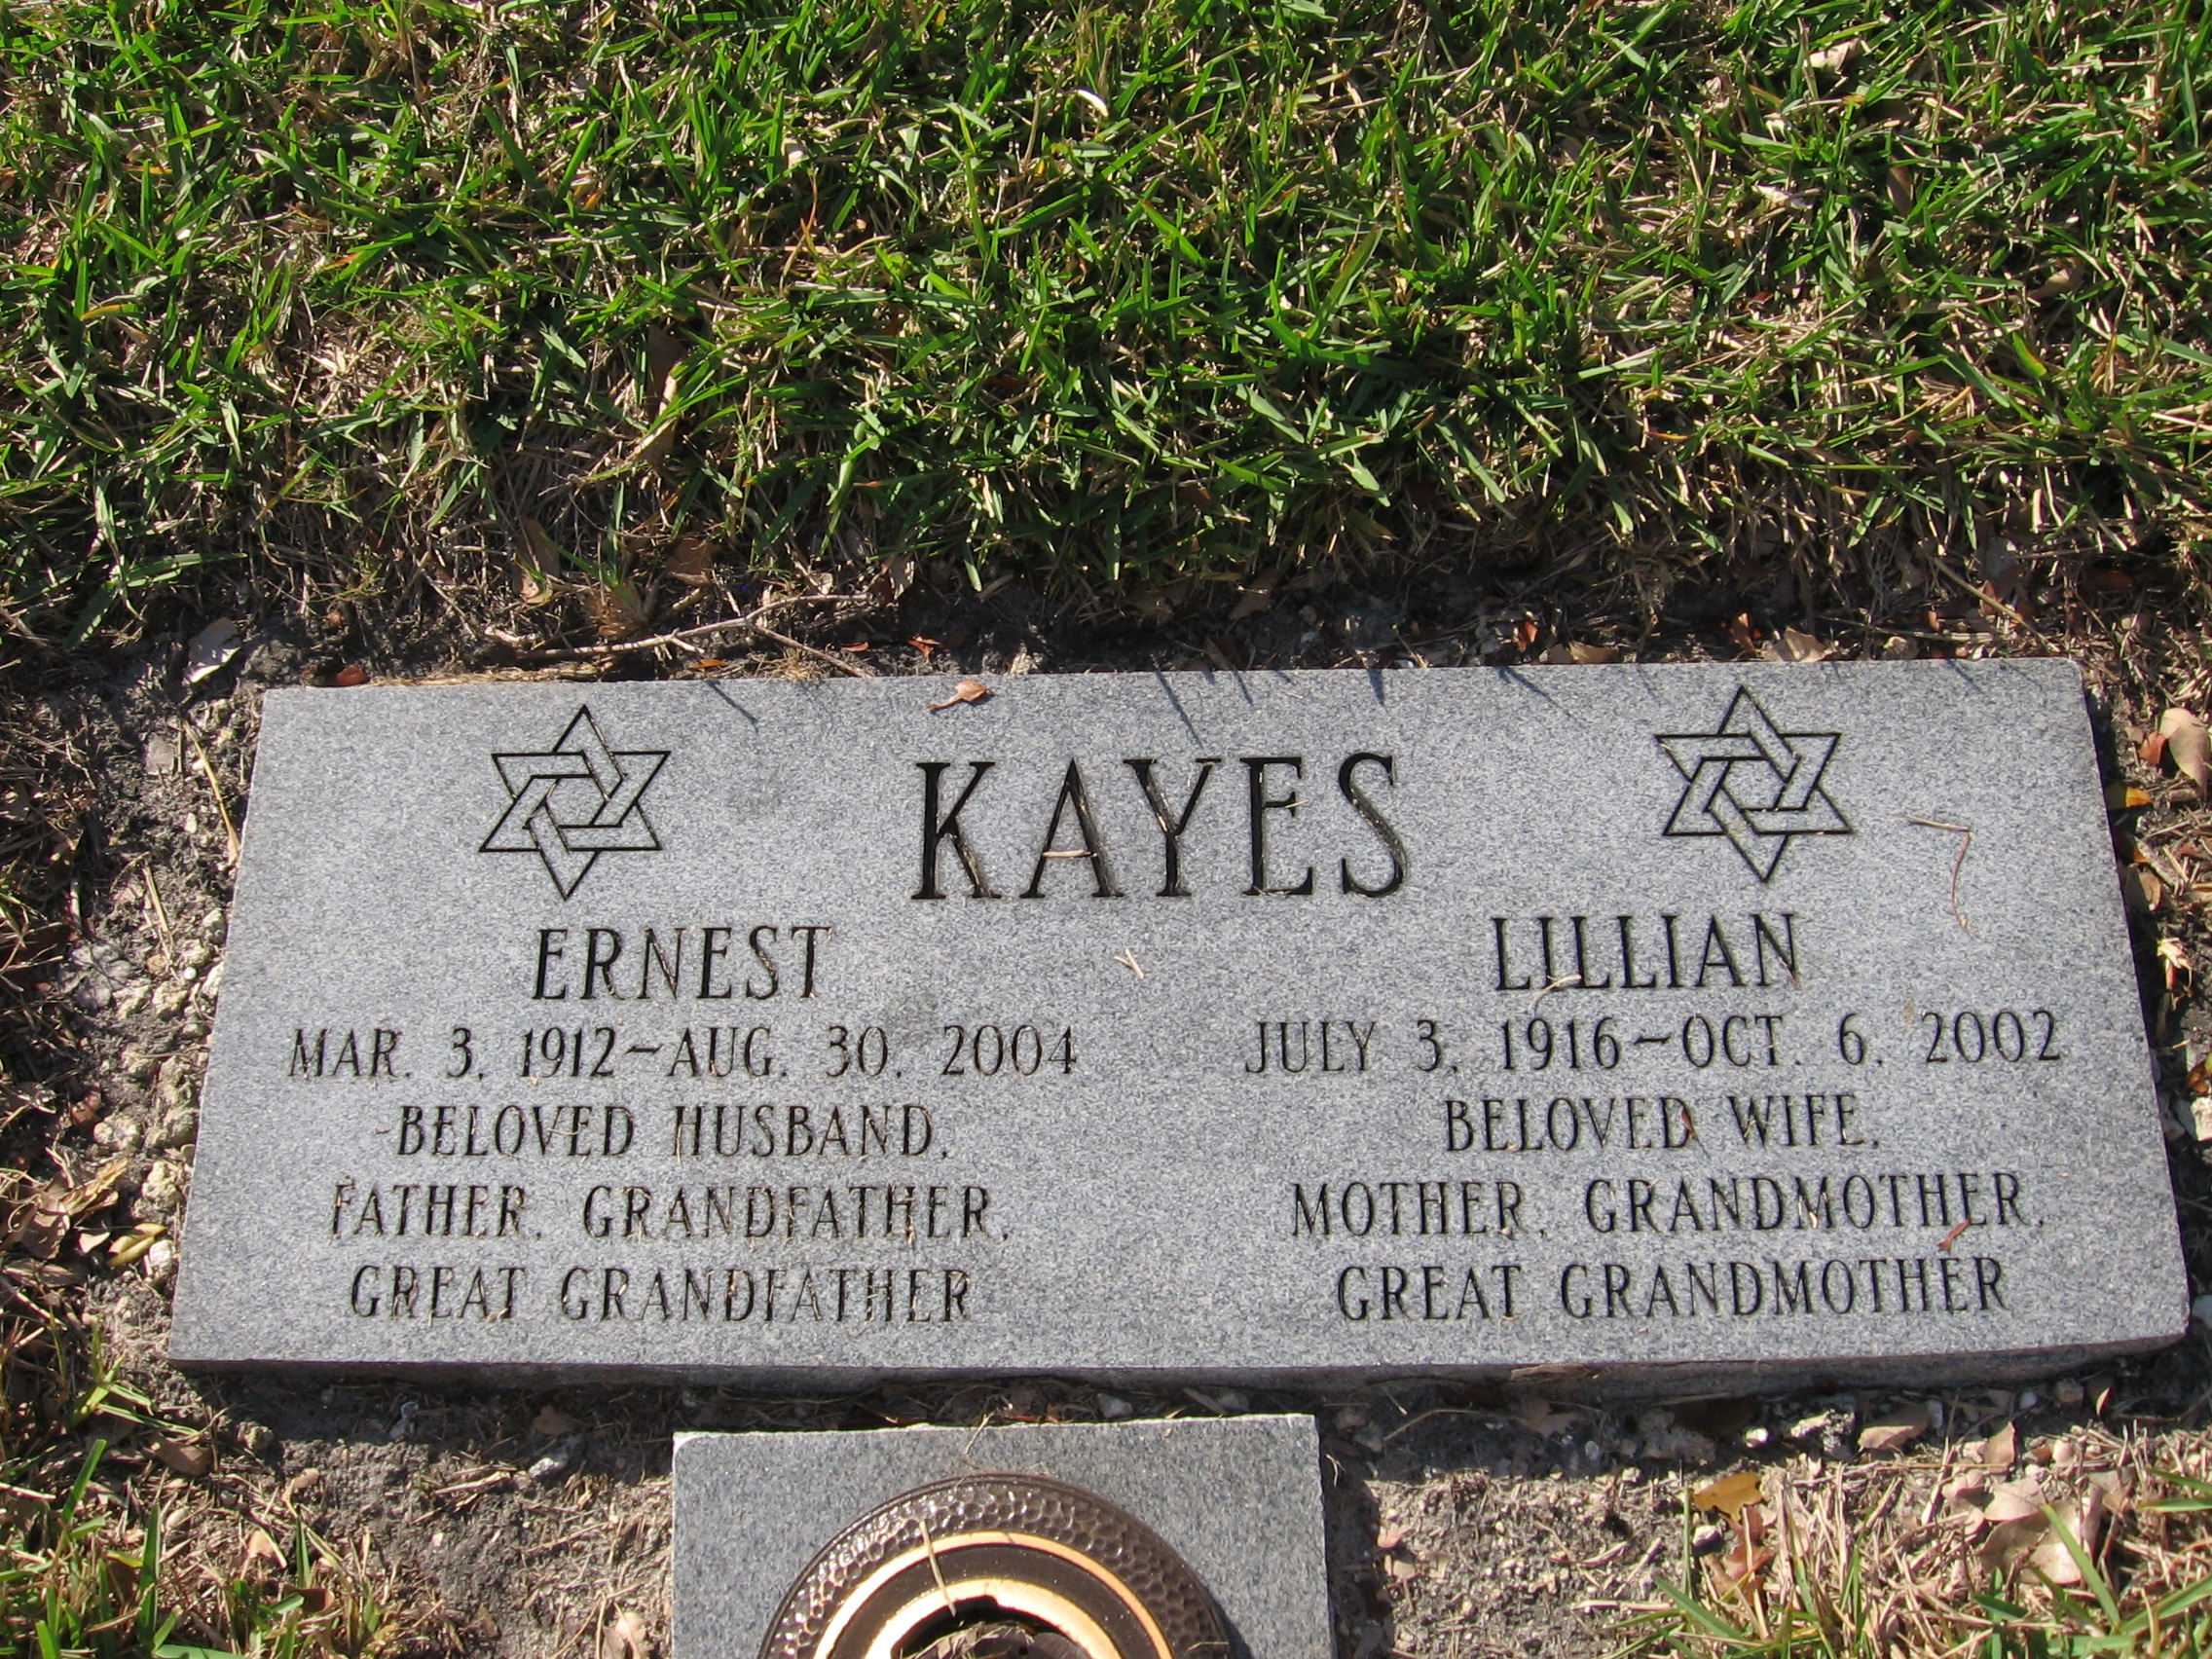 Ernest Kayes